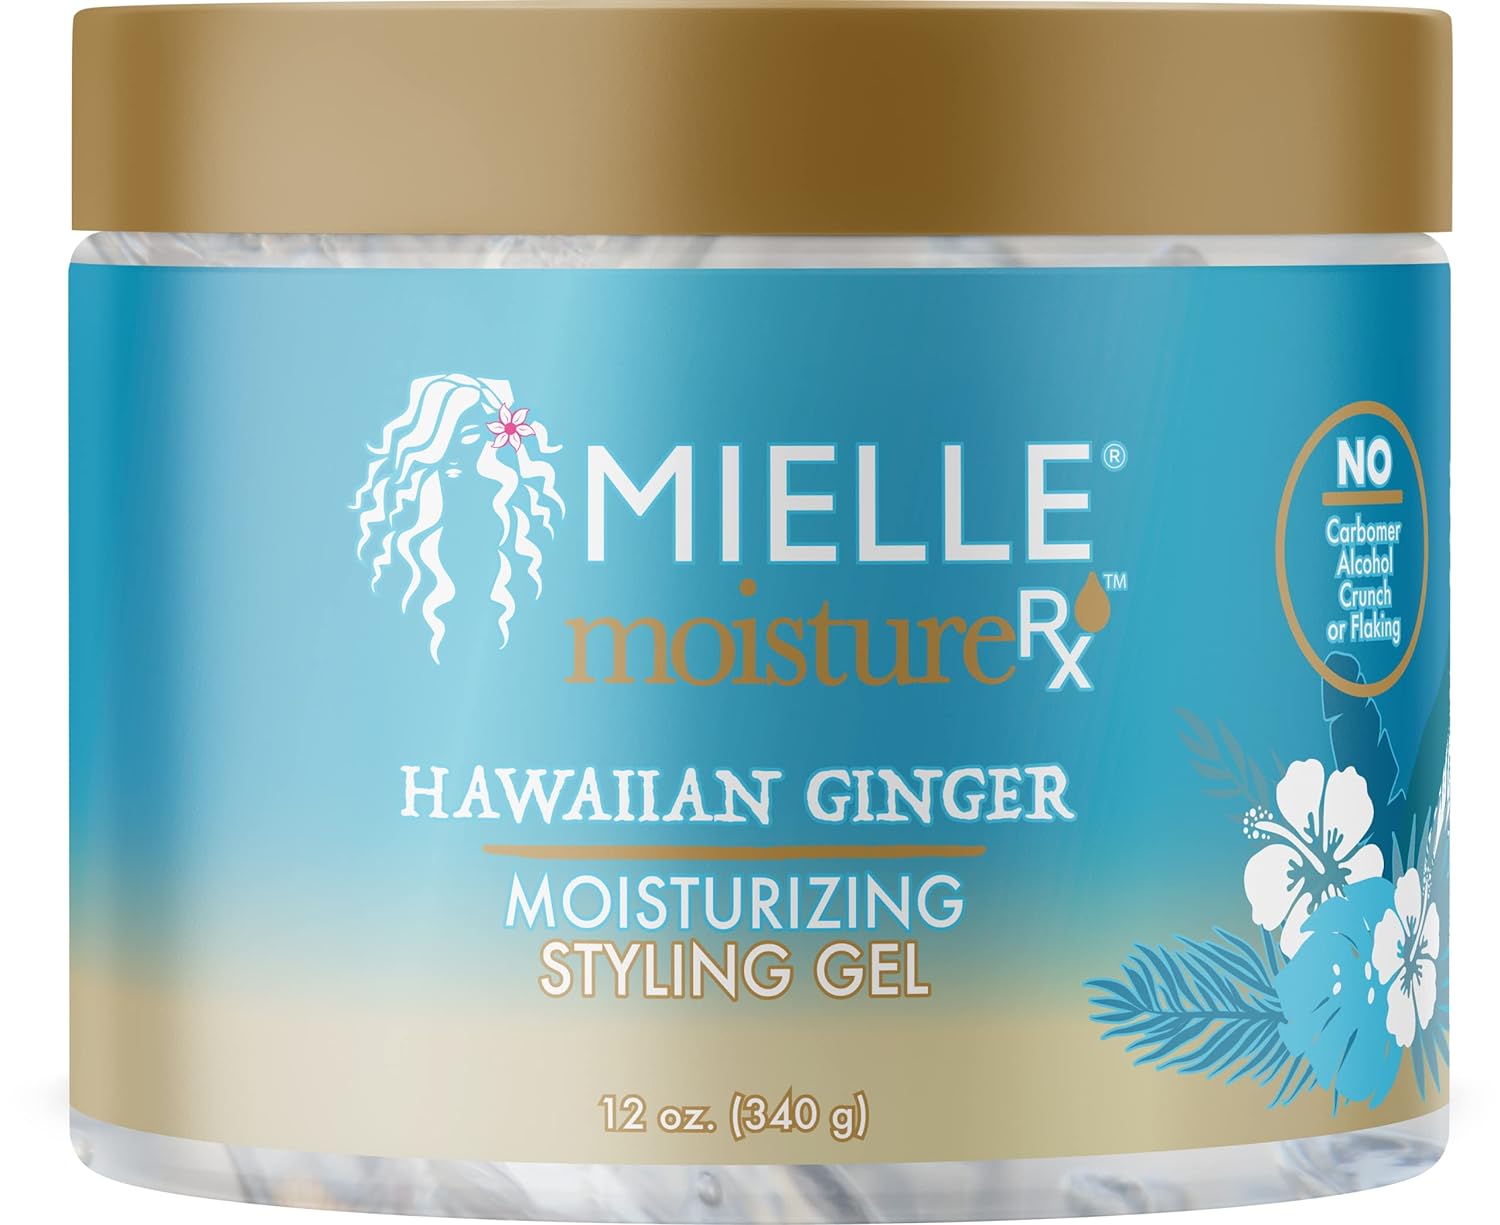 Mielle Moisture RX Moisturizing Styling Gel - Hawaiian Ginger, 12 oz